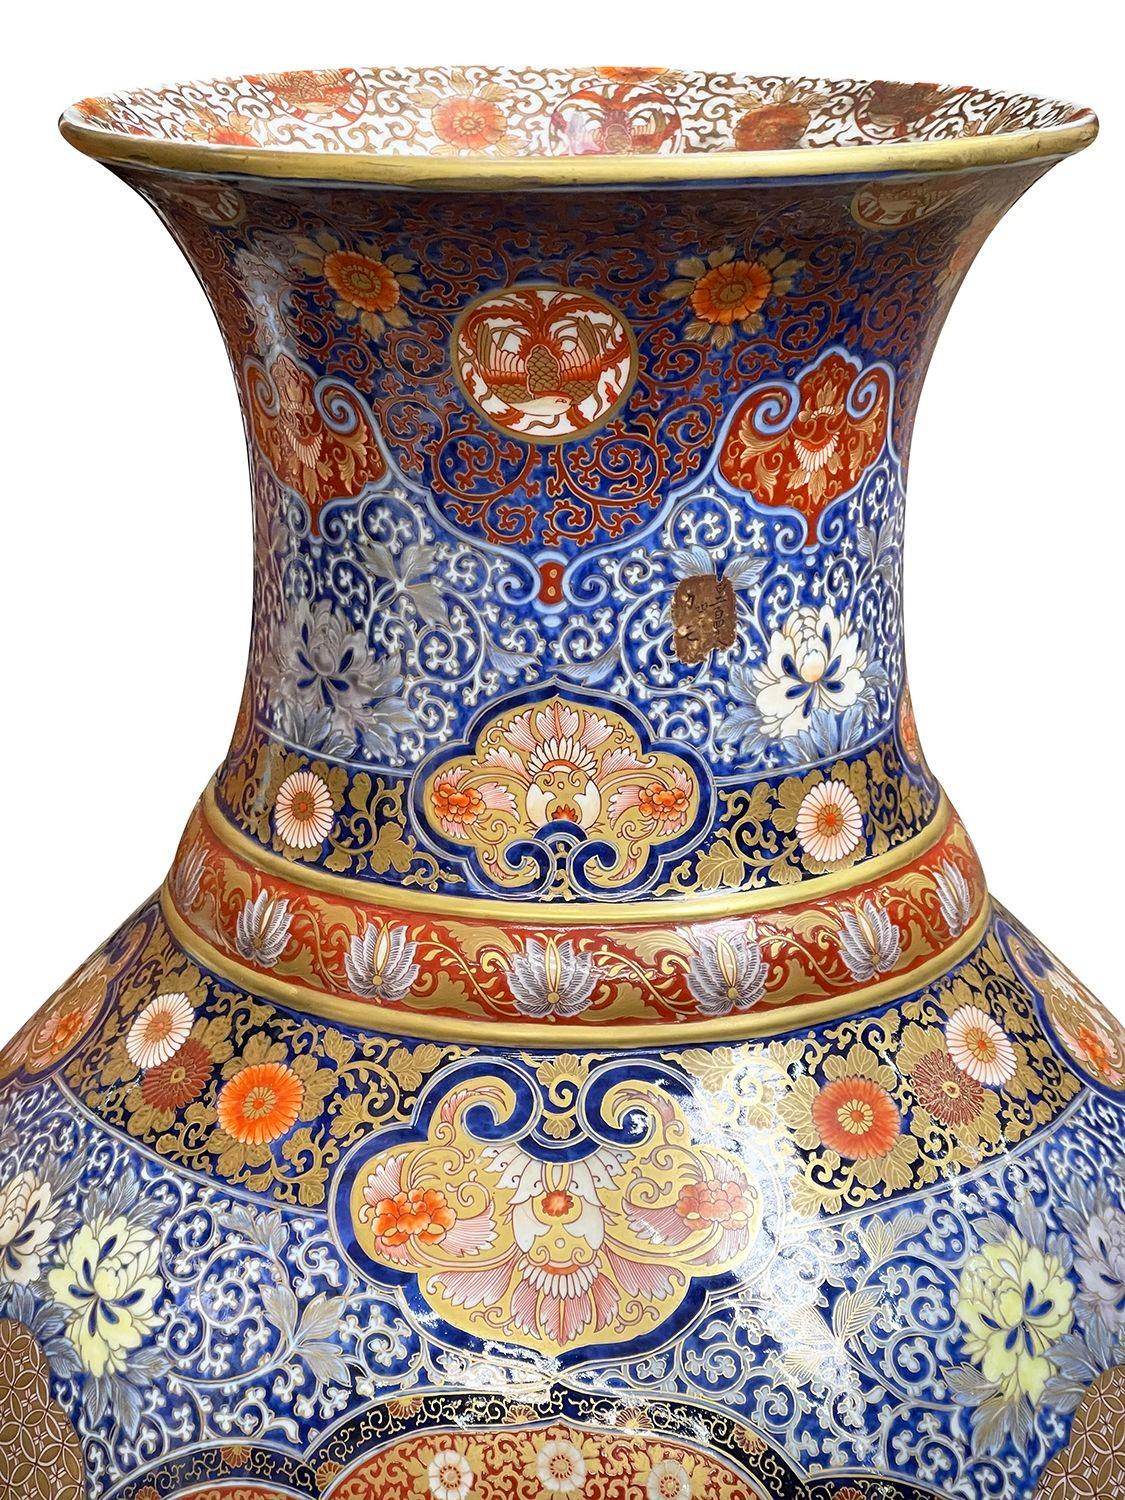 A large fine quality late 19th Century (Meiji period 1868-1912) Japanese Fukagawa Imari vase measuring 129cm (51